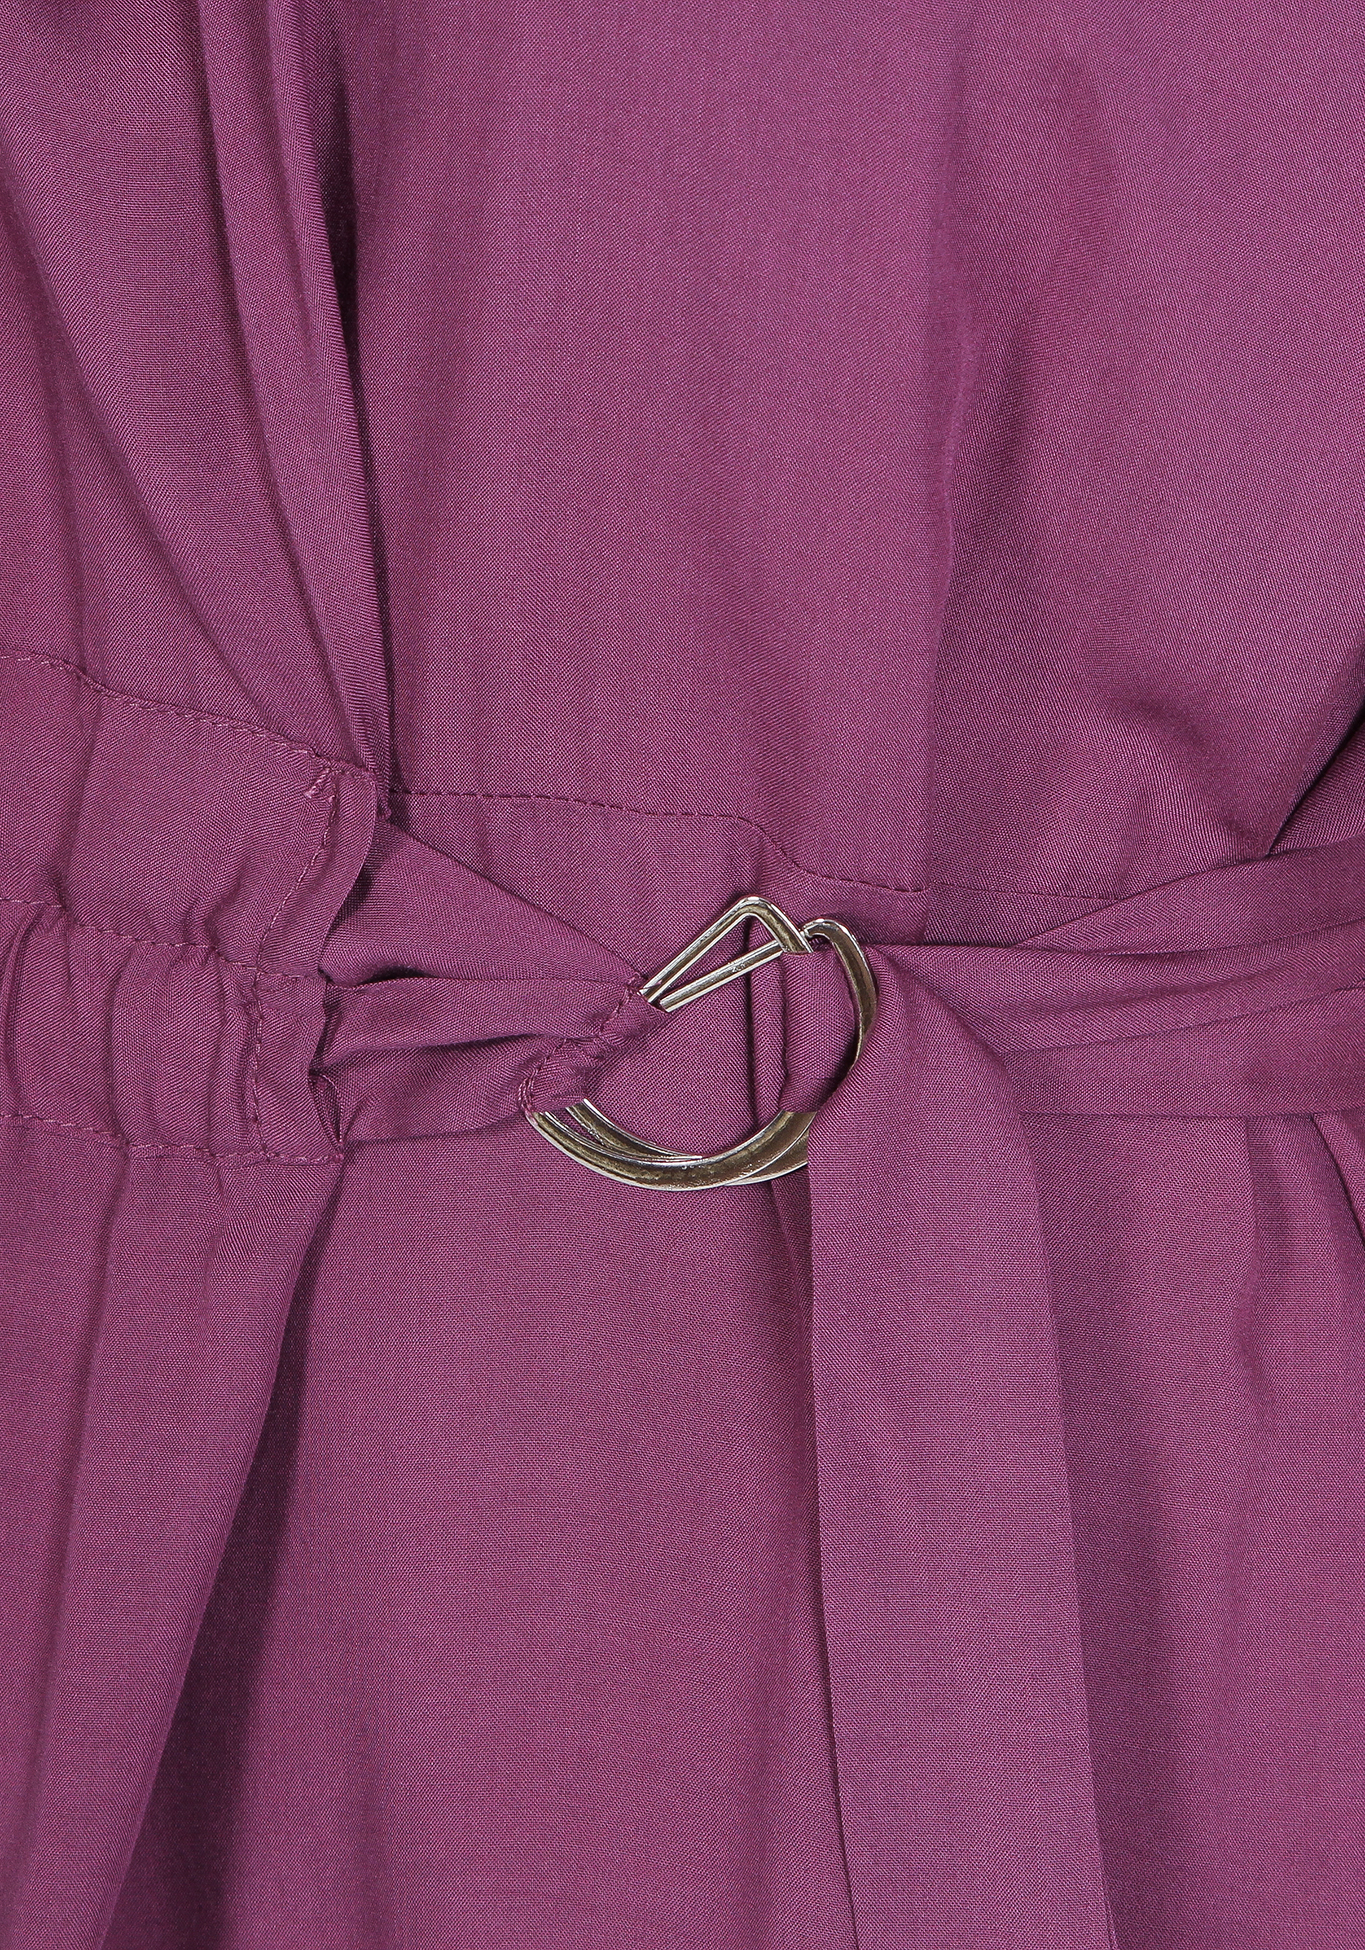 Платье "Алессандрия" Lovestyle, размер 50, цвет кофейный - фото 3